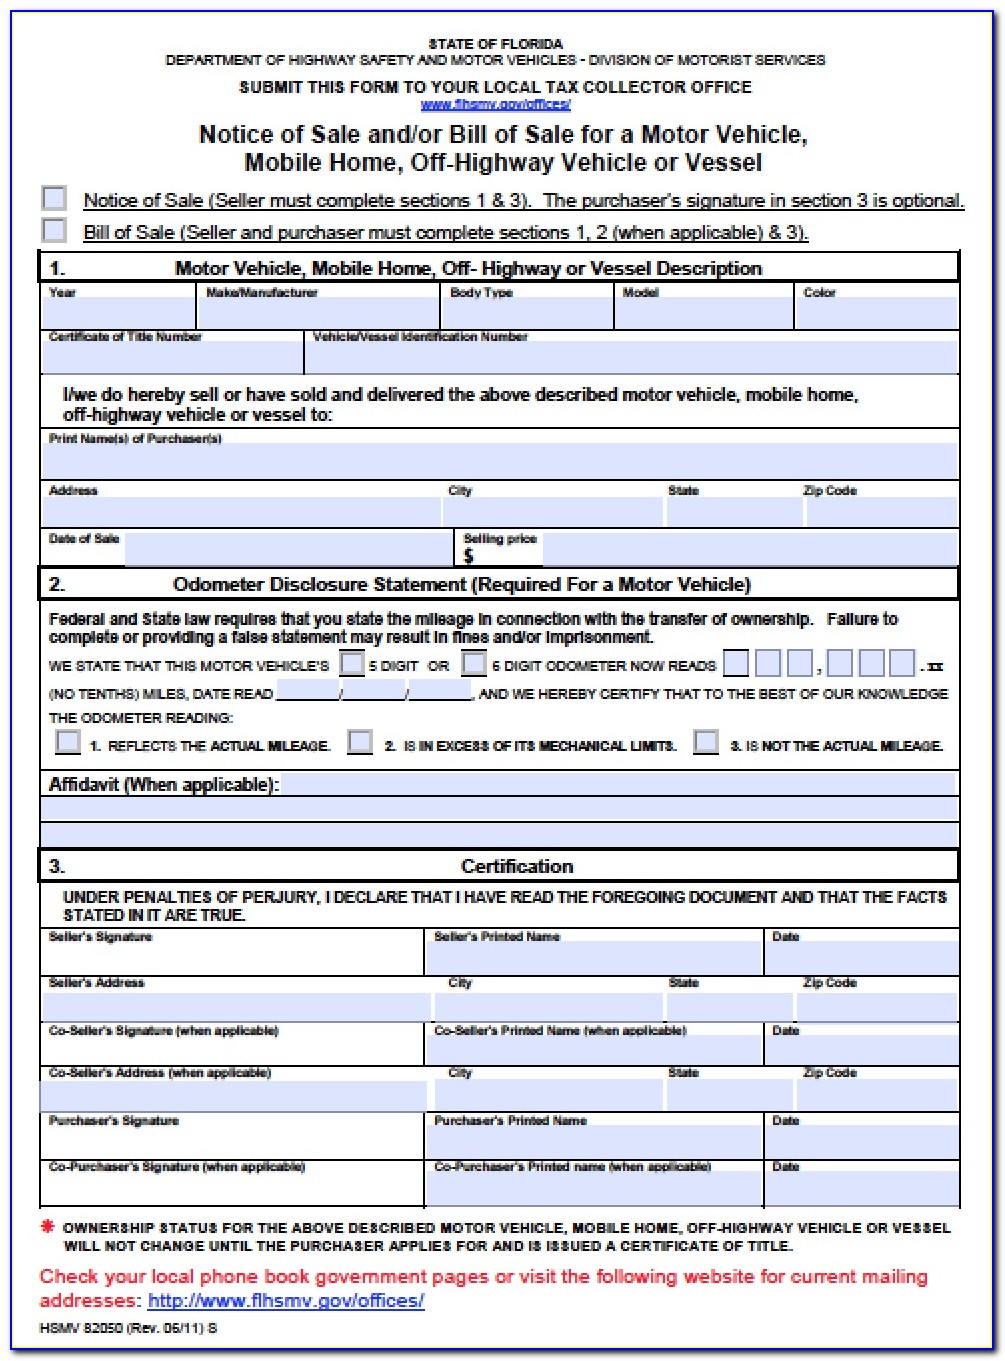 affidavit-of-indigency-form-florida-1040-tax-form